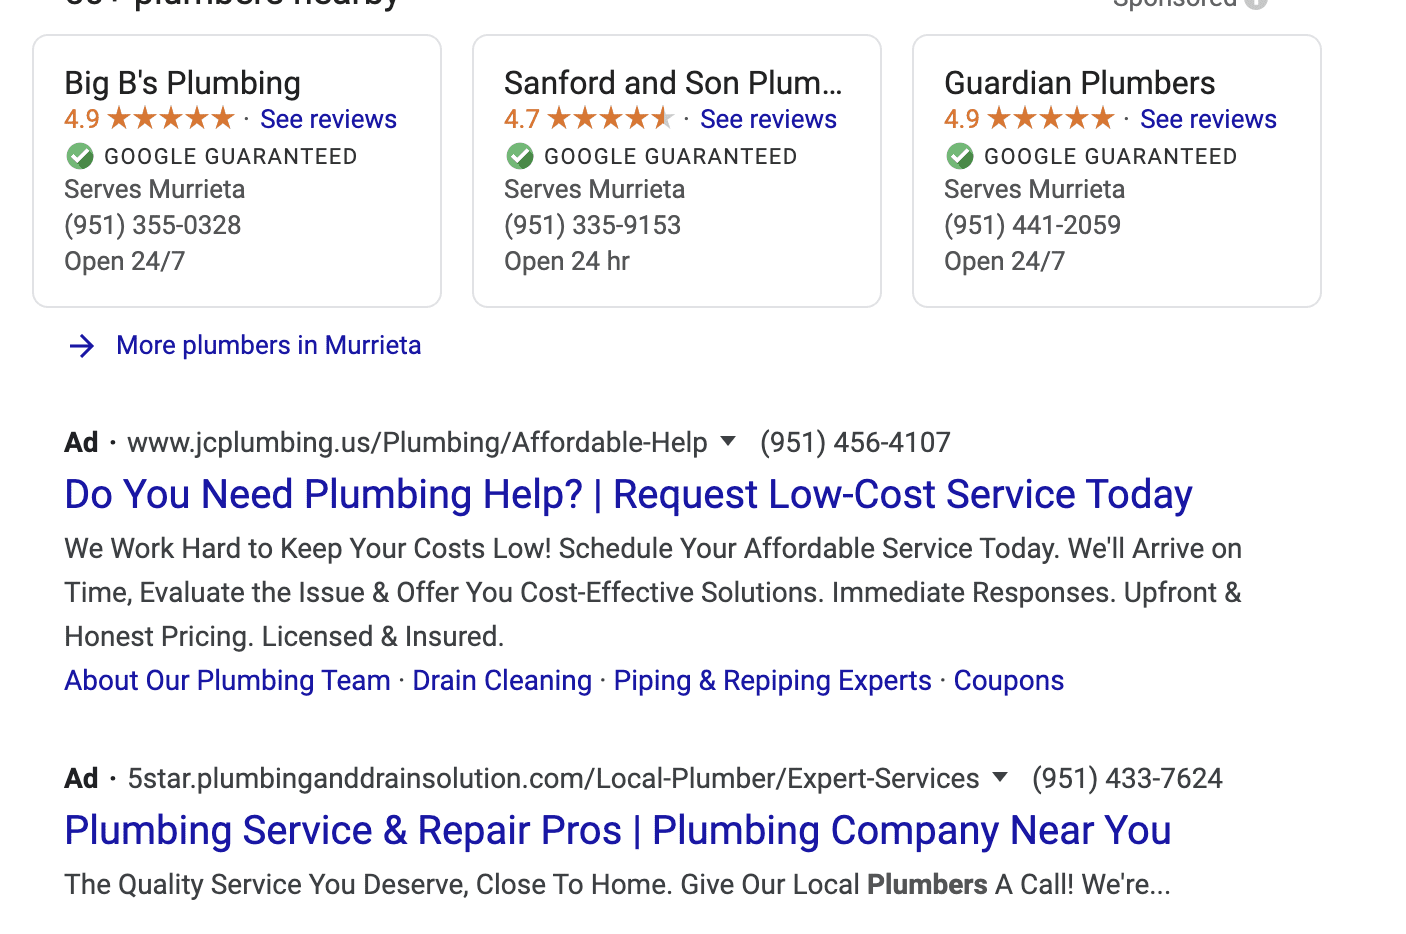 Future of plumbing